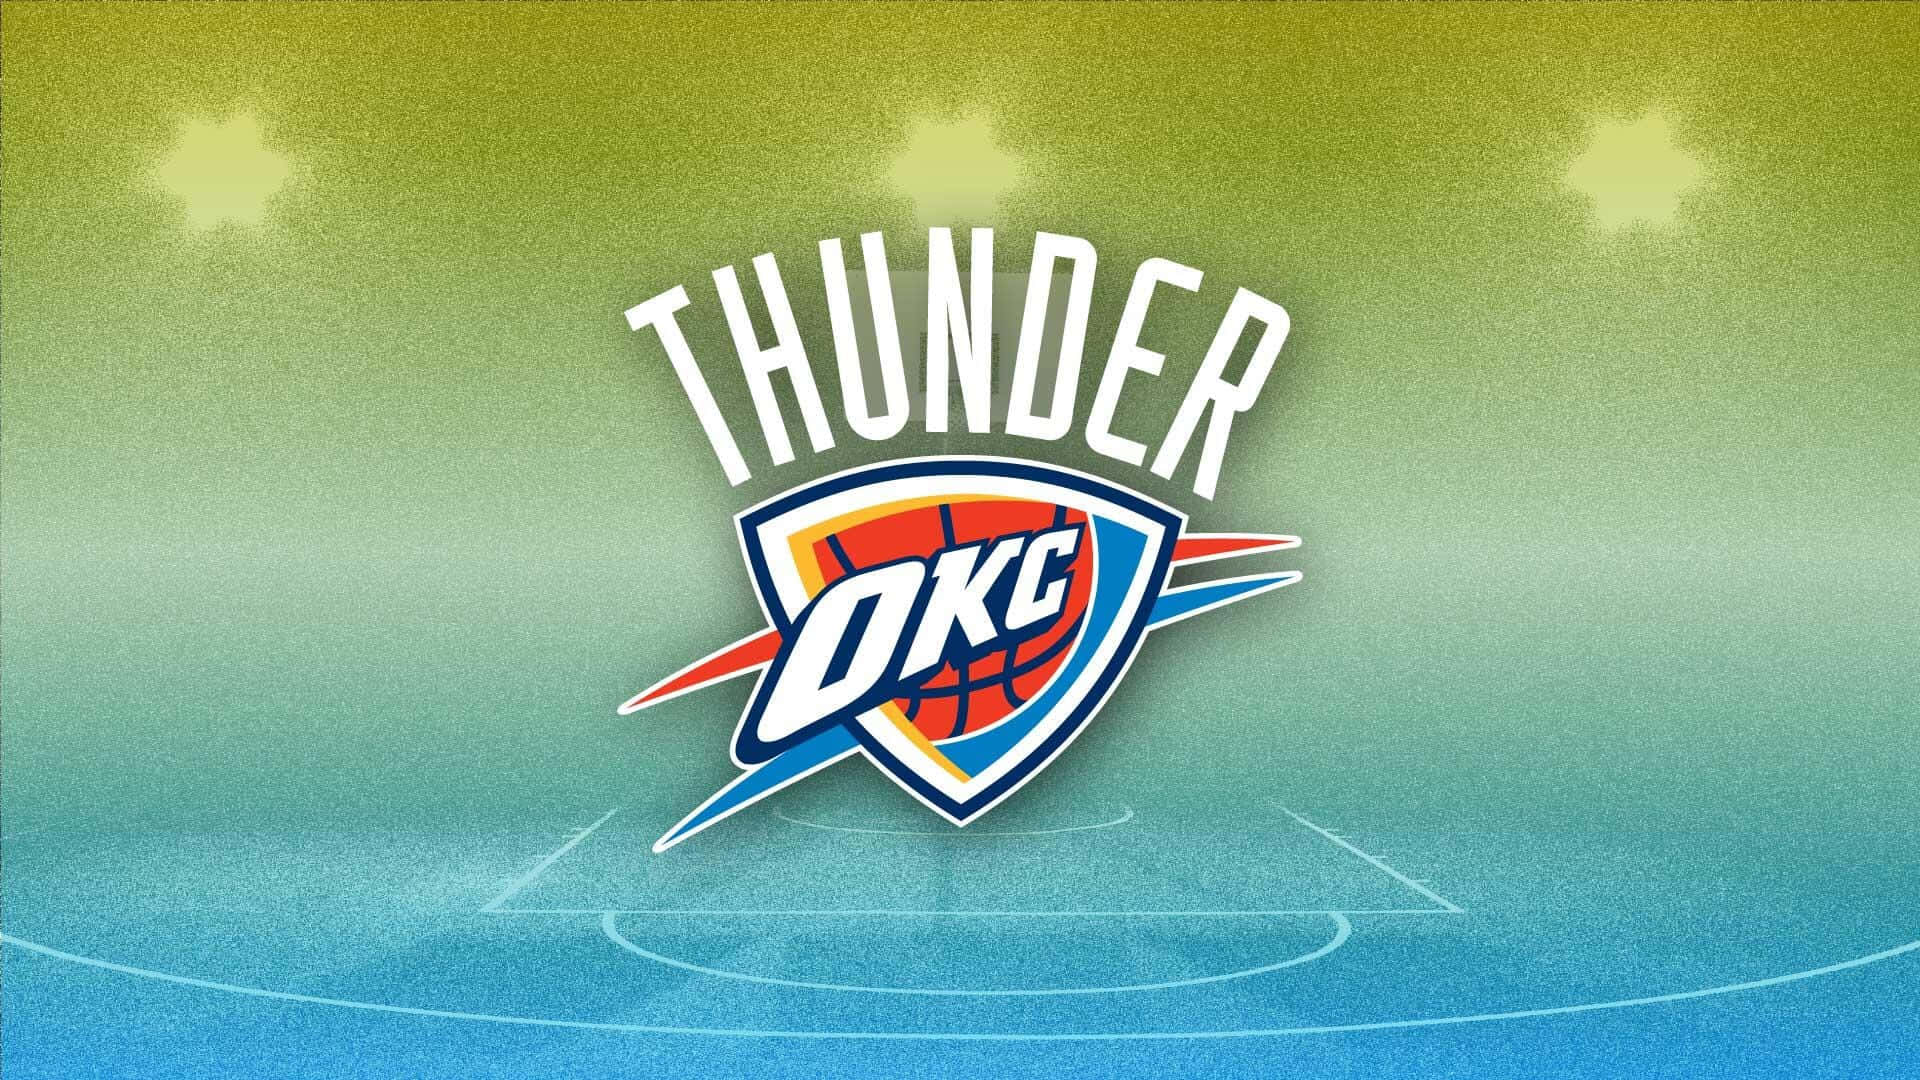 Oklahoma City Thunders OKC Team Logo And Name Wallpaper